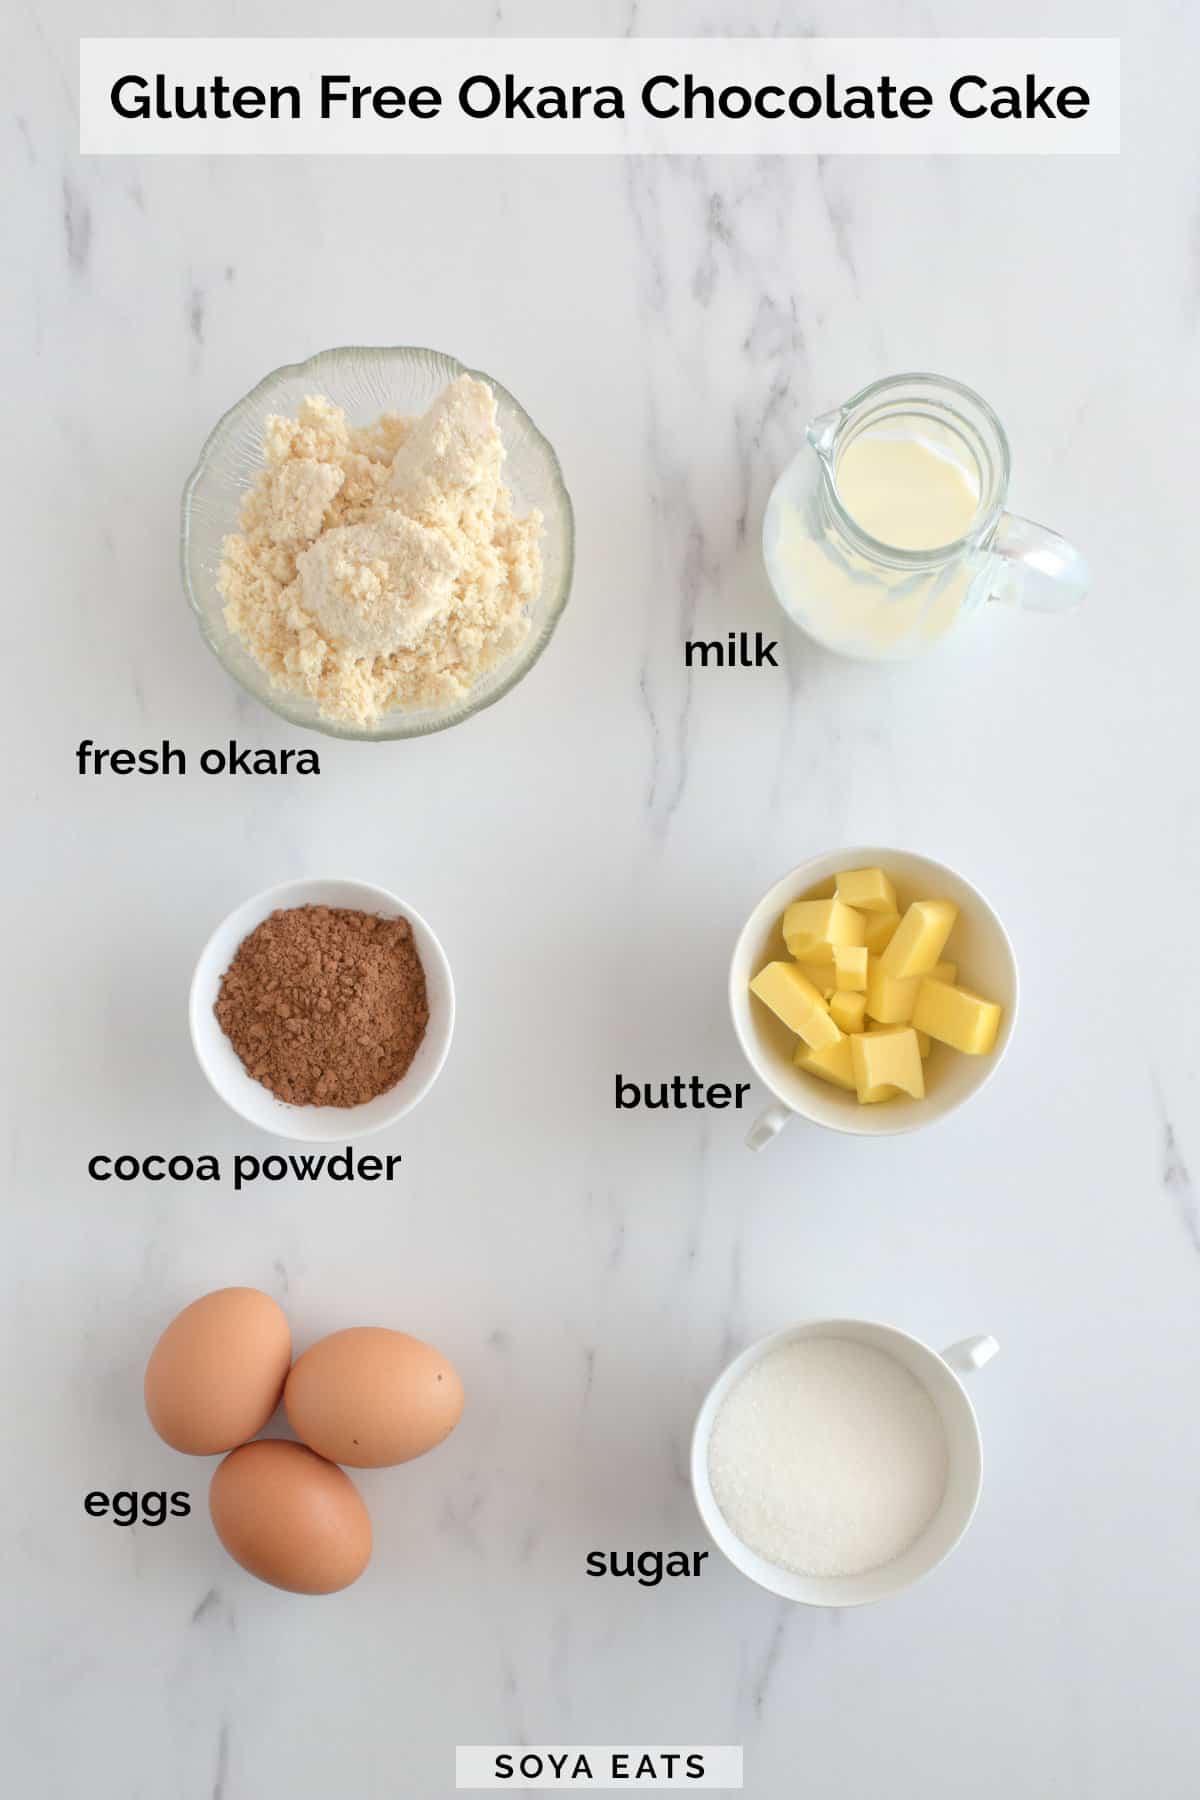 Image of ingredients for okara chocolate cake.